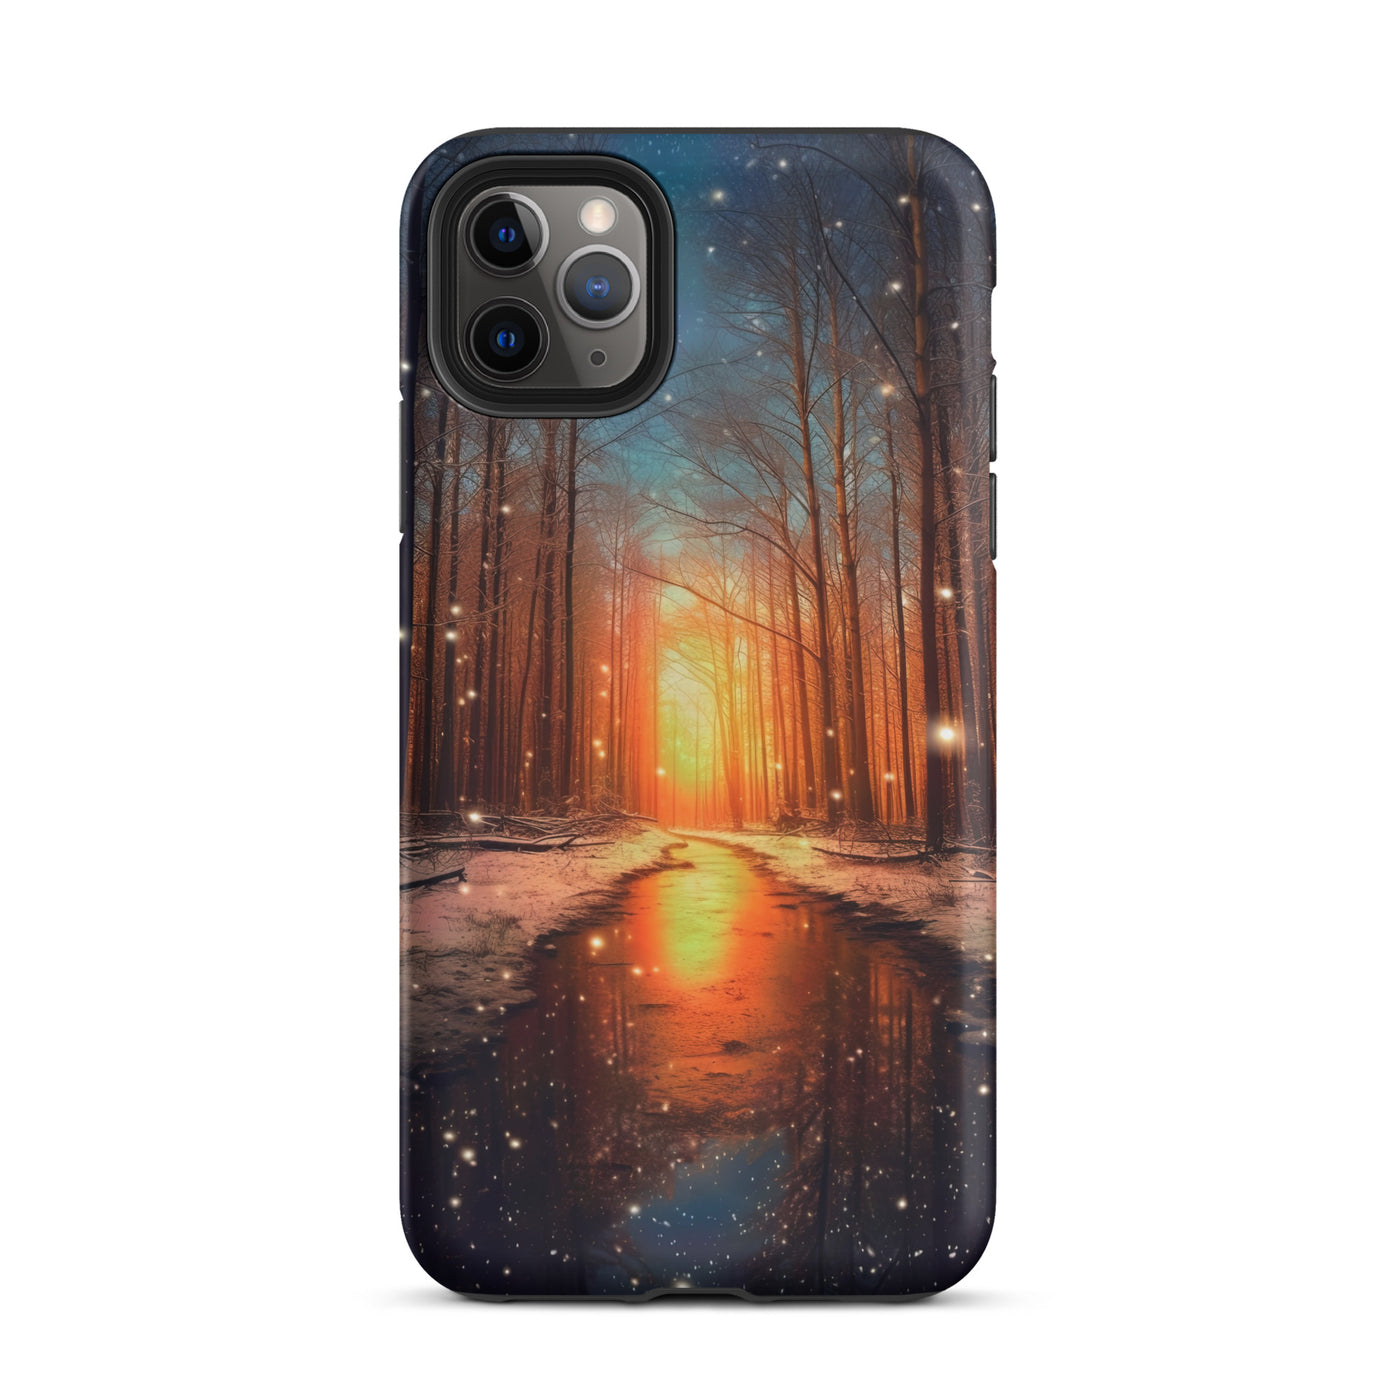 Bäume im Winter, Schnee, Sonnenaufgang und Fluss - iPhone Schutzhülle (robust) camping xxx iPhone 11 Pro Max